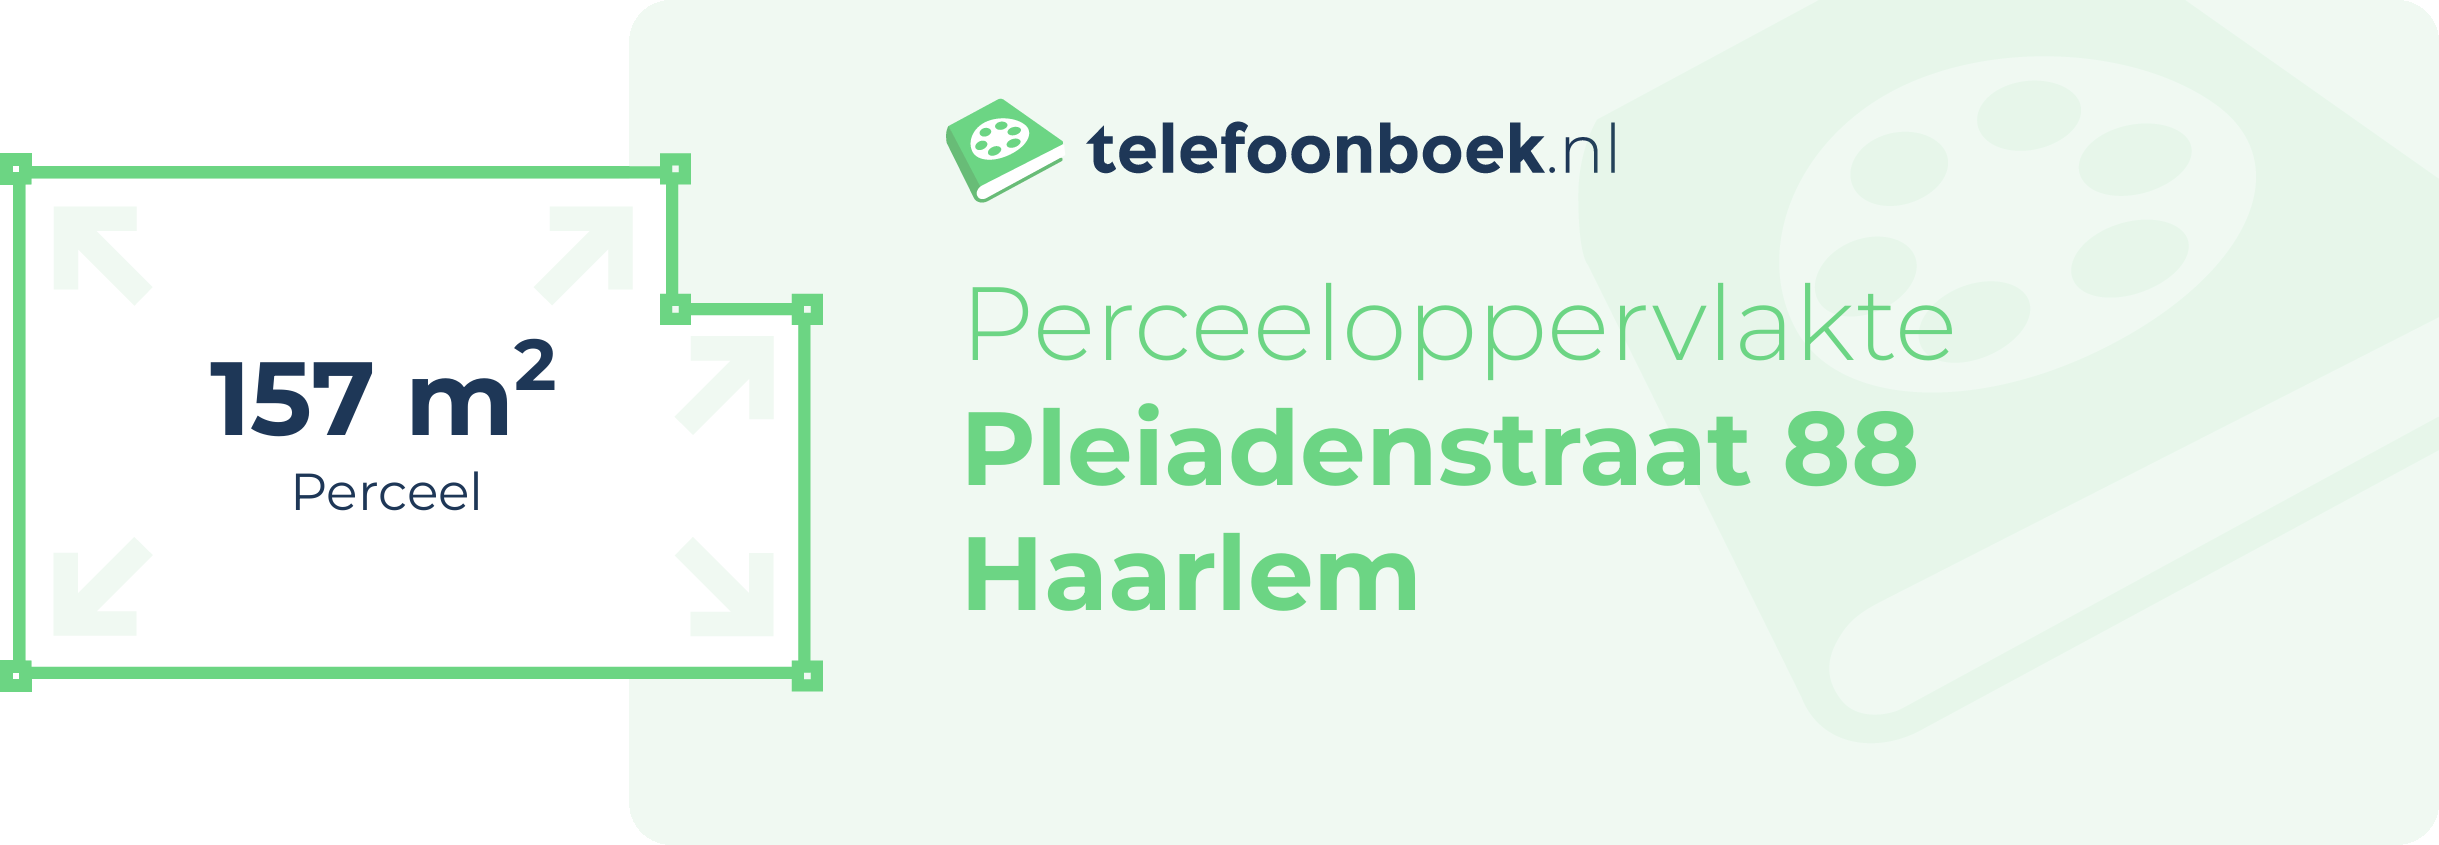 Perceeloppervlakte Pleiadenstraat 88 Haarlem